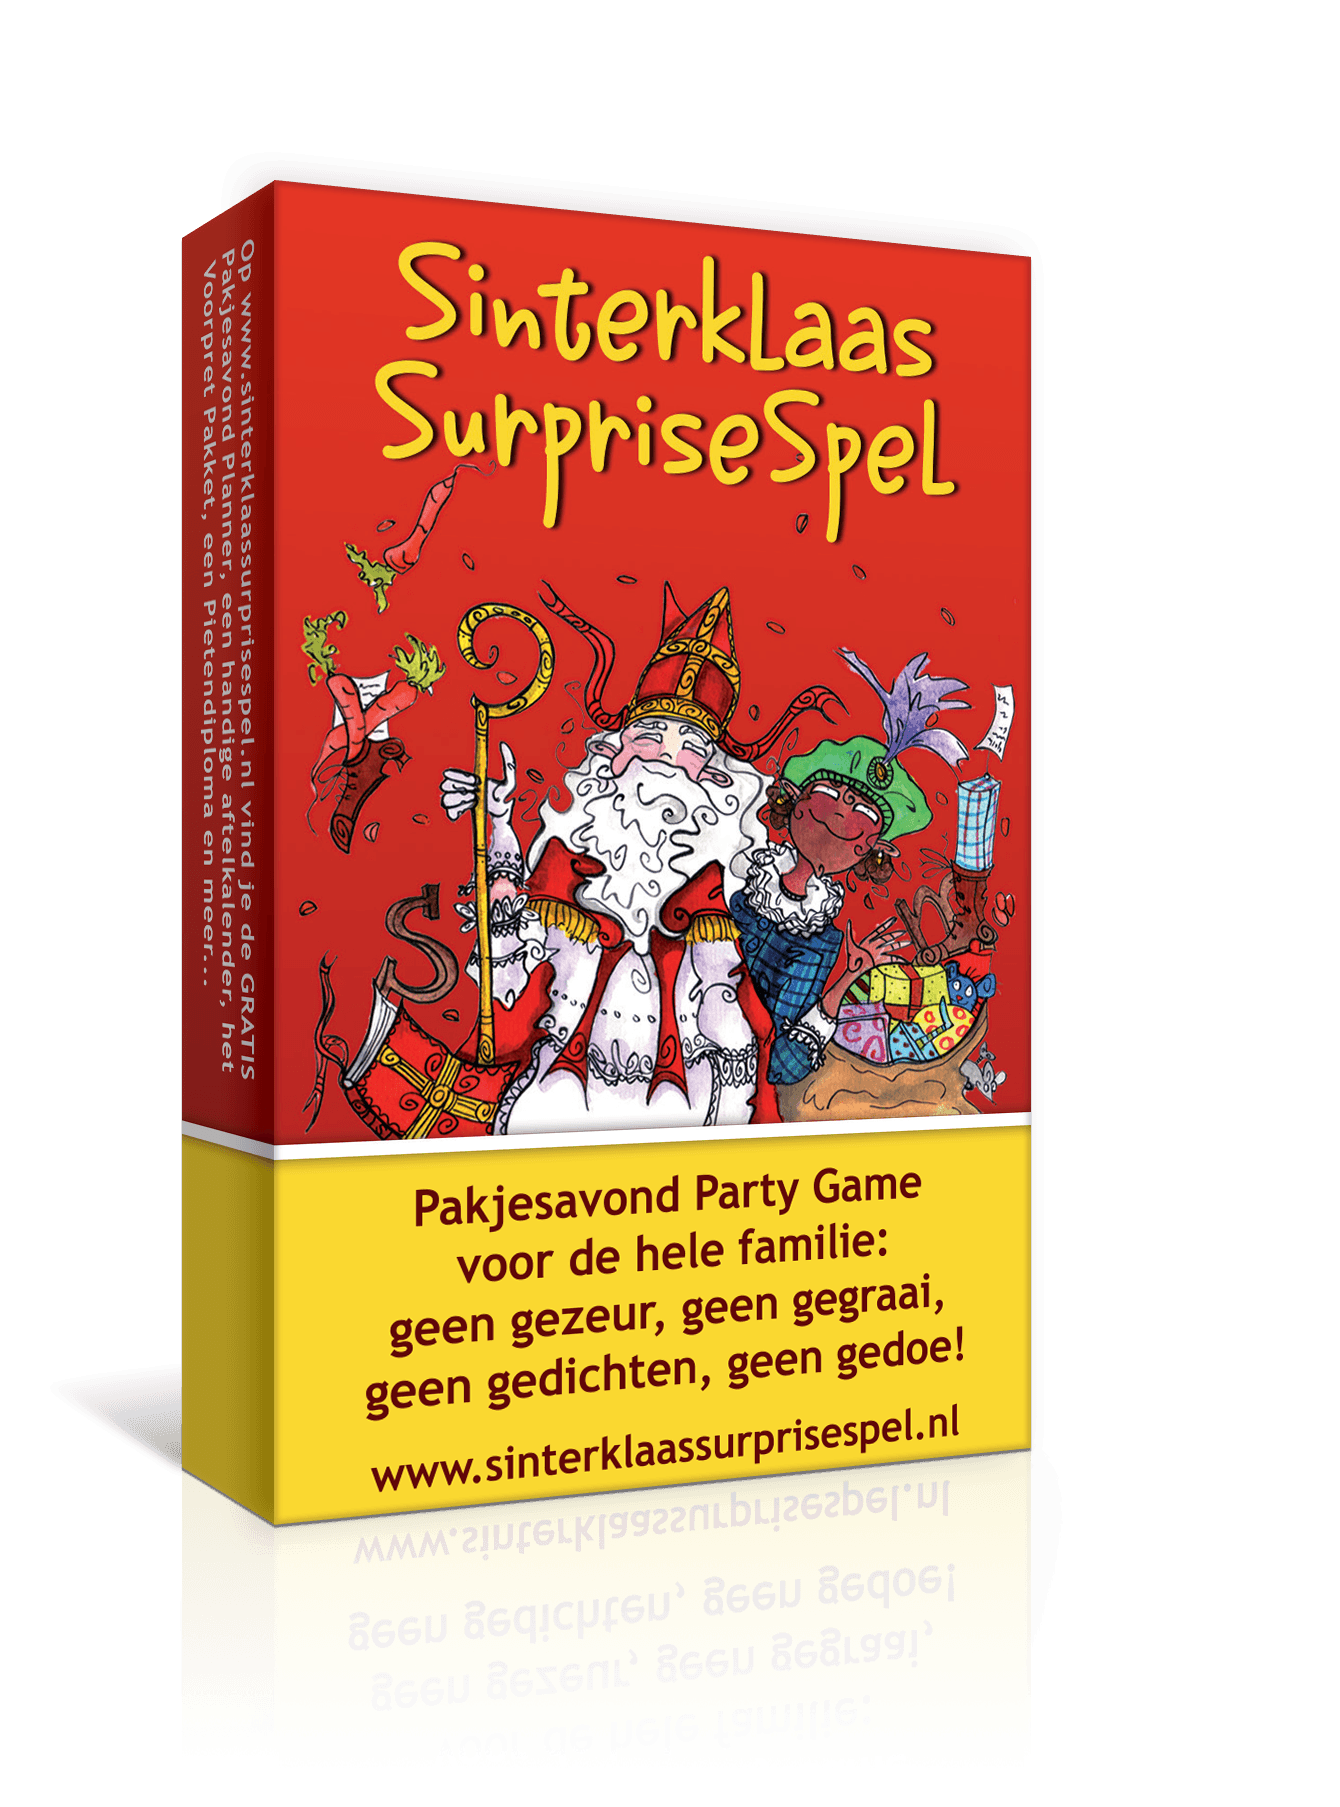 Sinterklaas Surprisespel Pakjesavond Party Game - Zo vieren ze Sinterklaas in Nederland